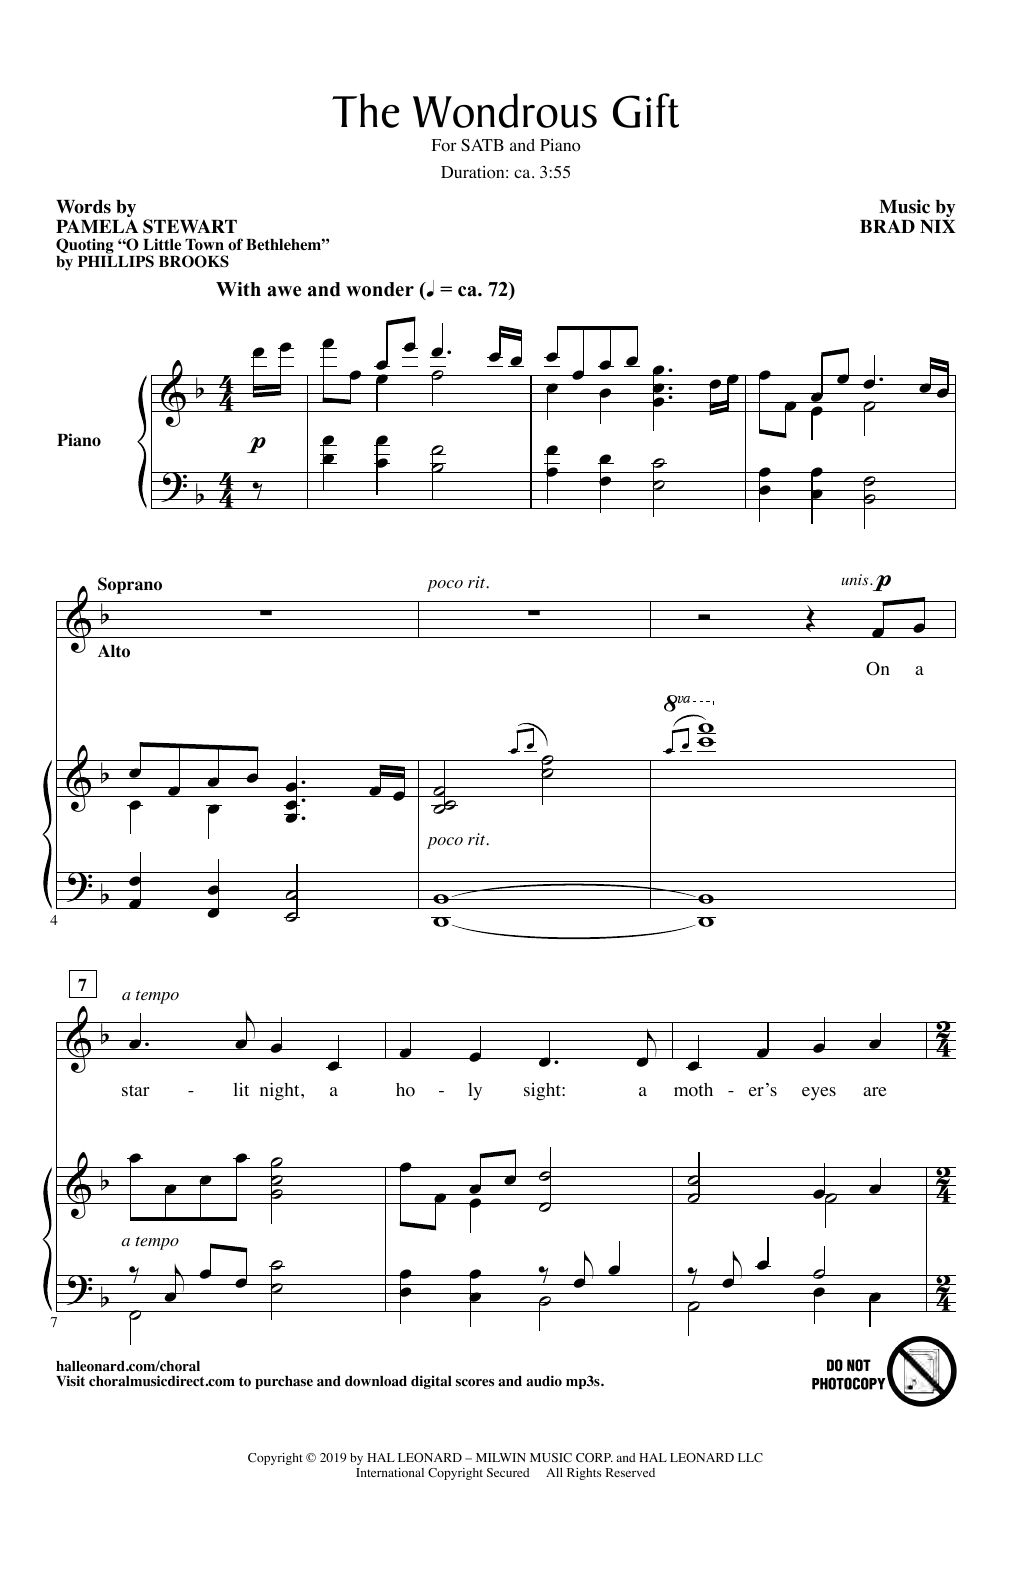 Pamela Stewart & Brad Nix The Wondrous Gift Sheet Music Notes & Chords for SATB Choir - Download or Print PDF